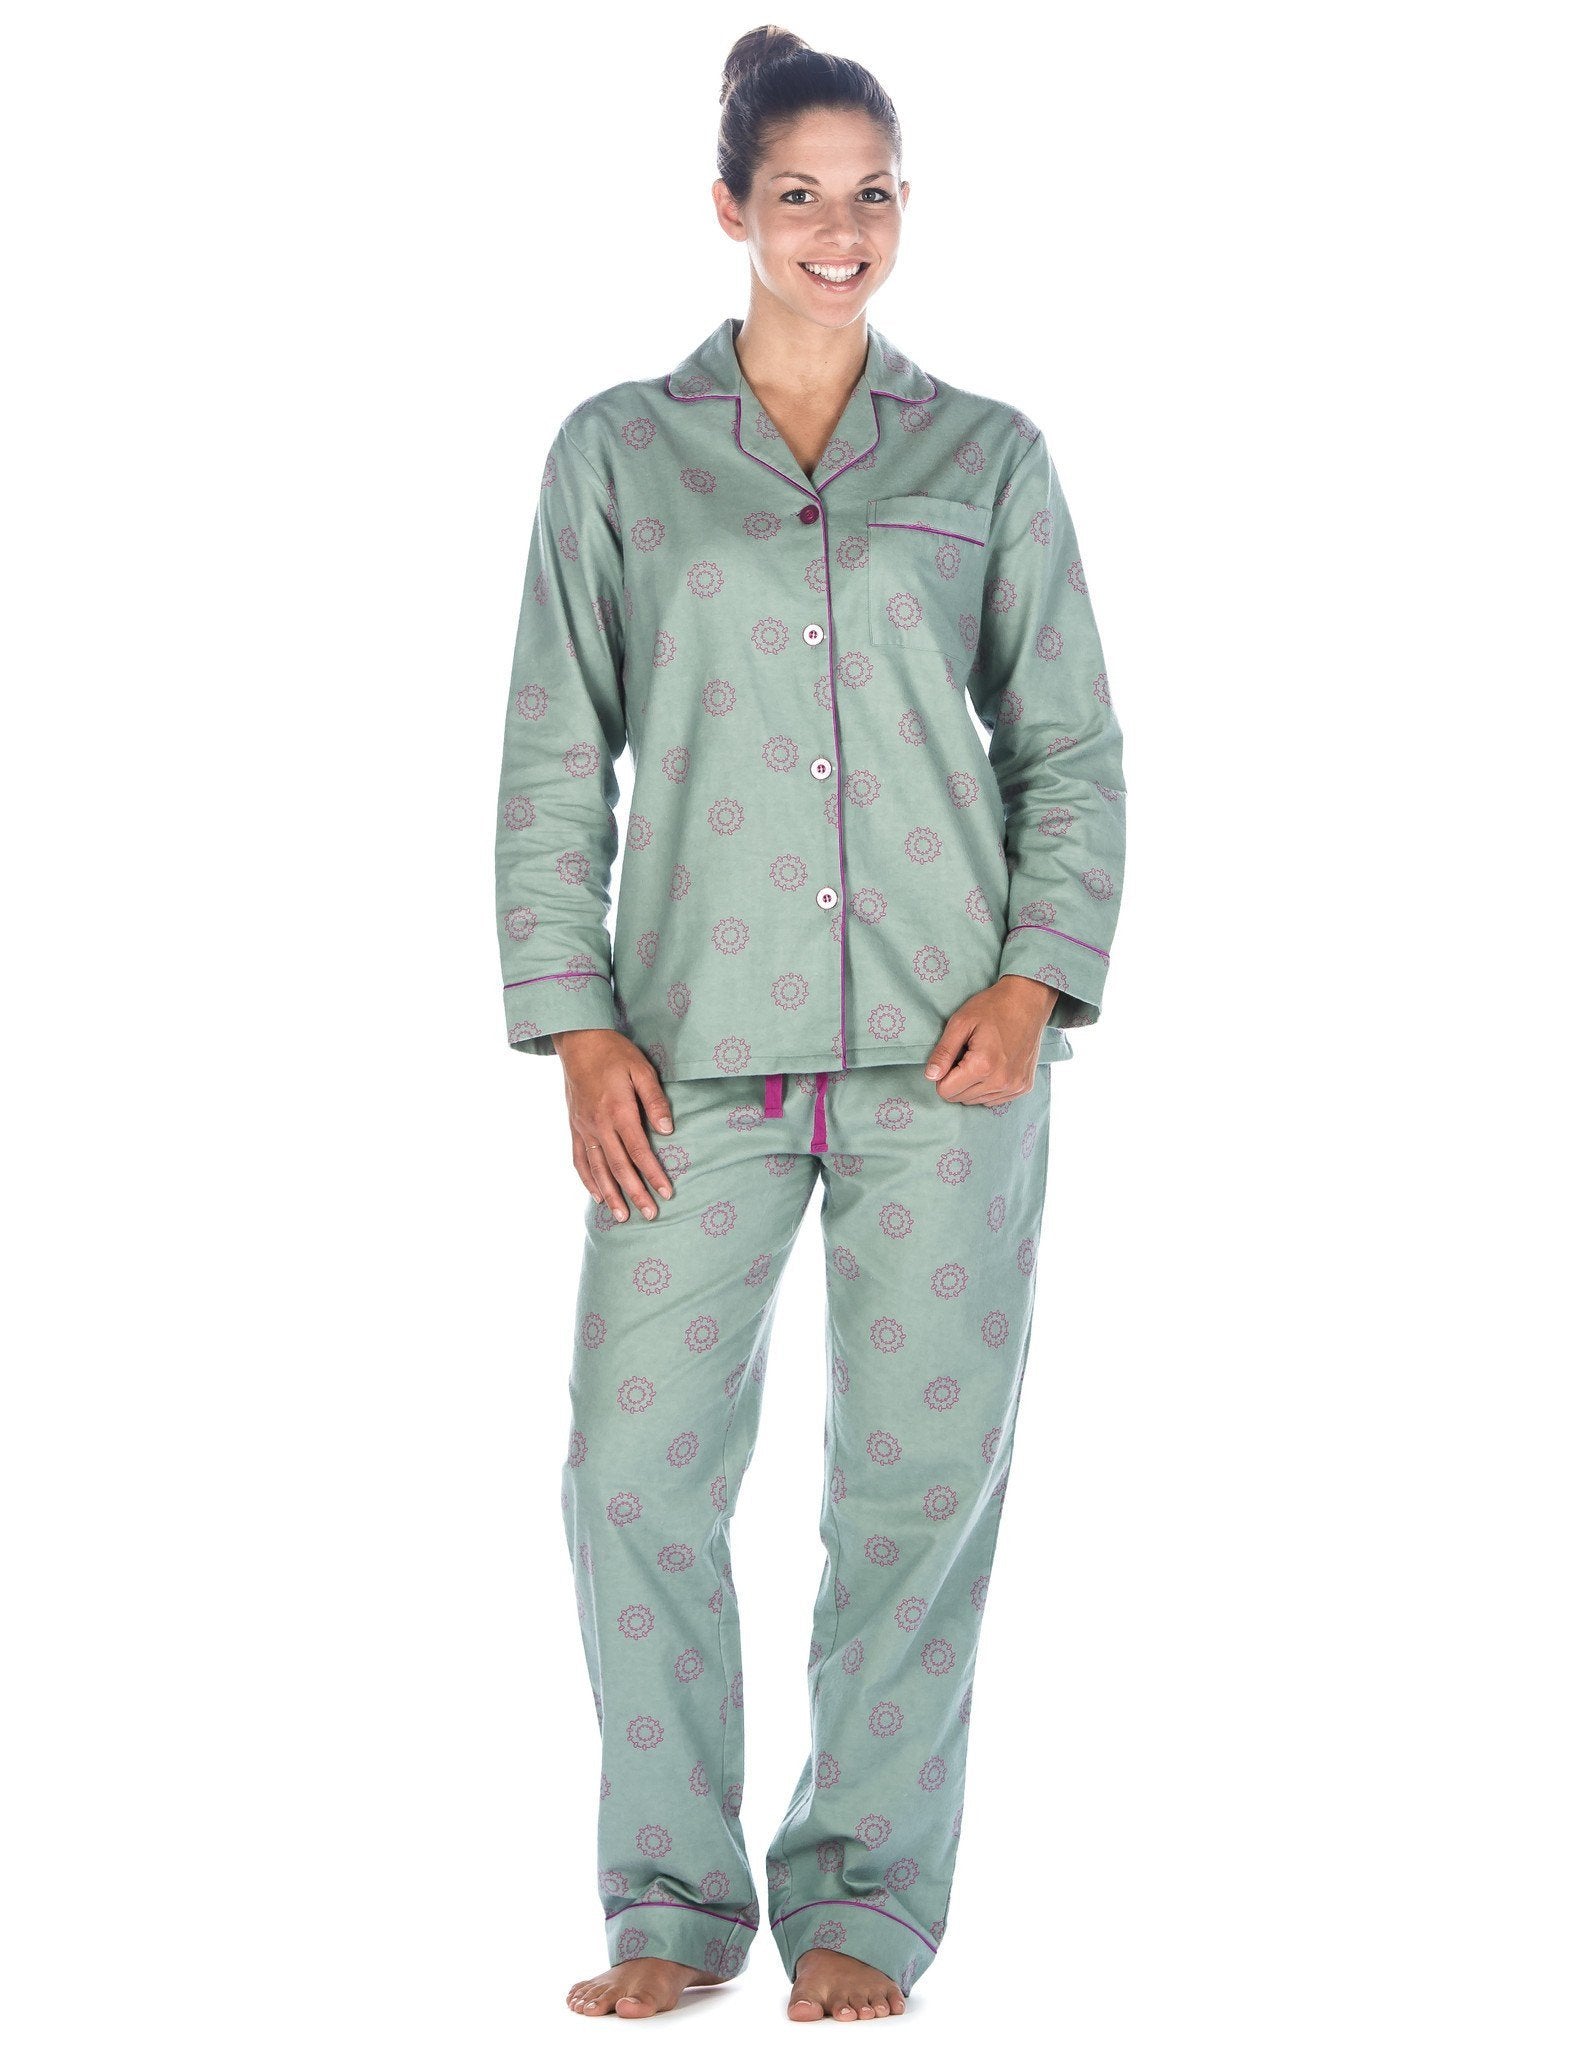 Women's Premium 100% Cotton Flannel Pajama Sleepwear Set (Relaxed Fit) - Ginko Circles - Green